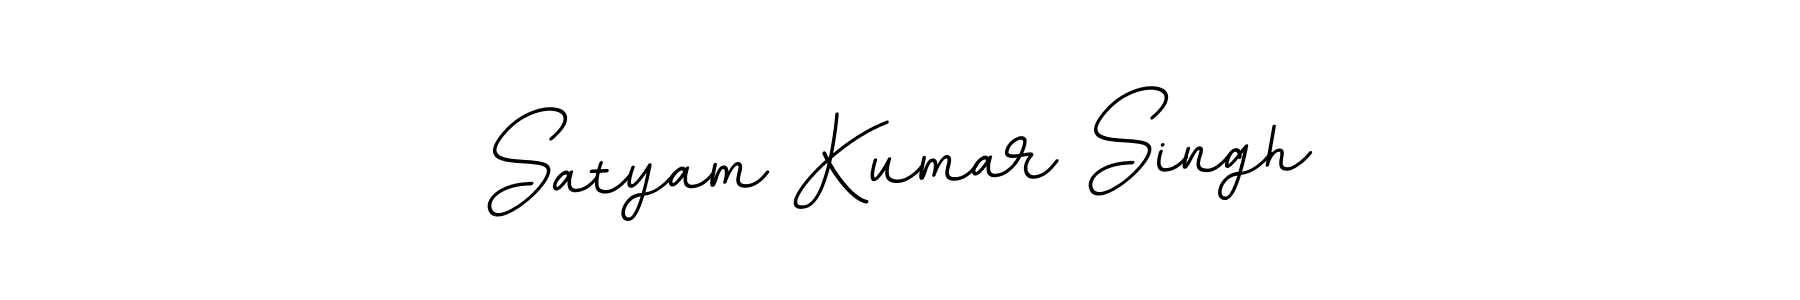 How to Draw Satyam Kumar Singh signature style? BallpointsItalic-DORy9 is a latest design signature styles for name Satyam Kumar Singh. Satyam Kumar Singh signature style 11 images and pictures png